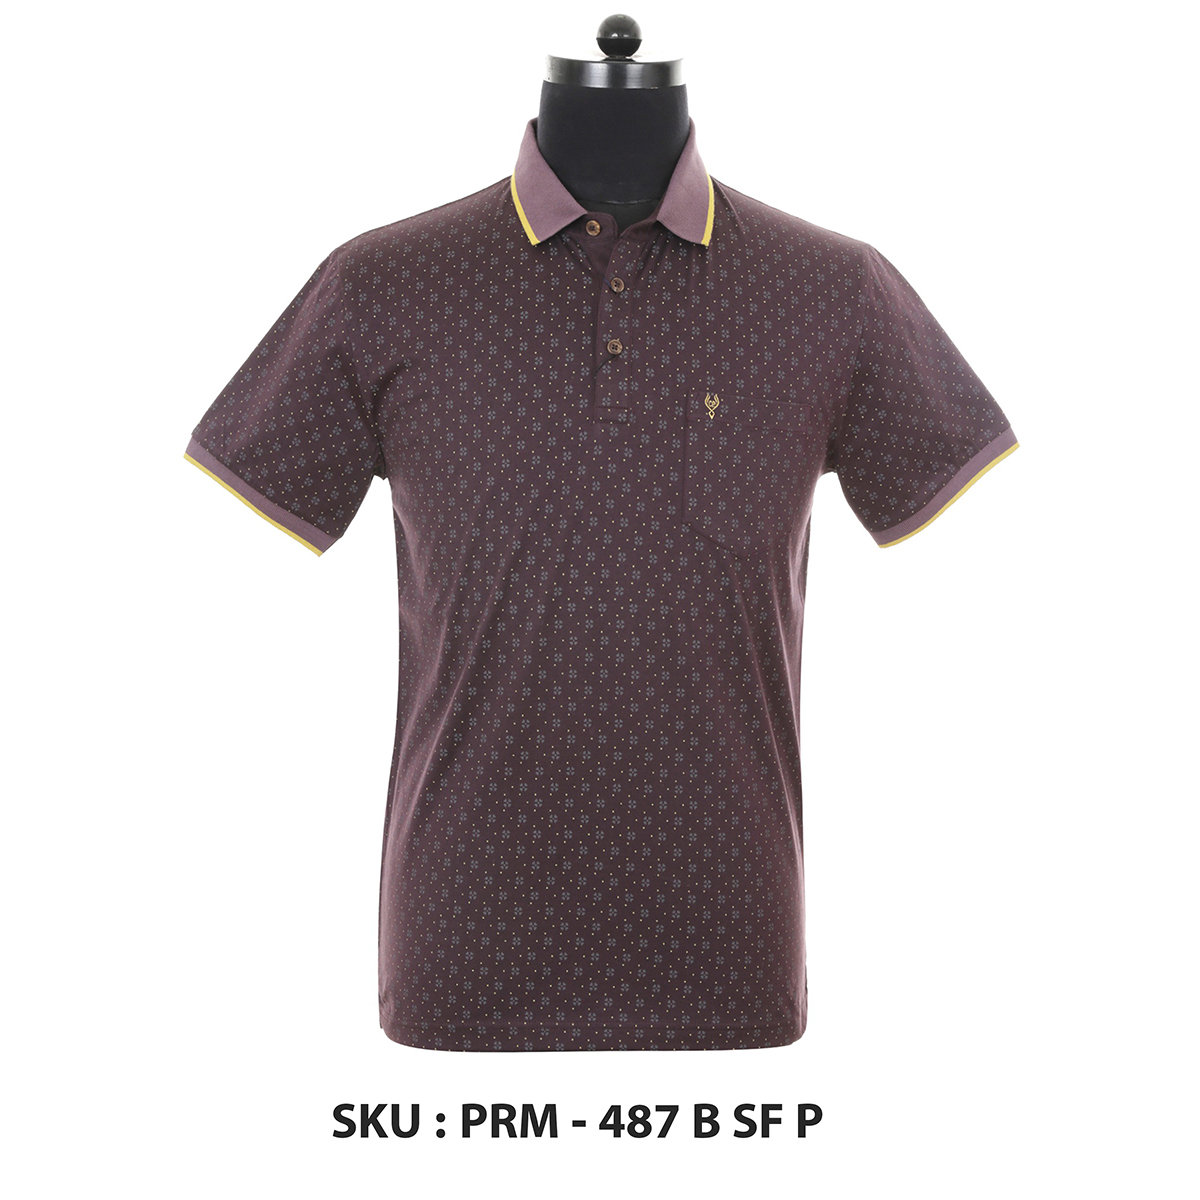 Classic Polo Mens T Shirt Prm - 487 B Sf P Brown M